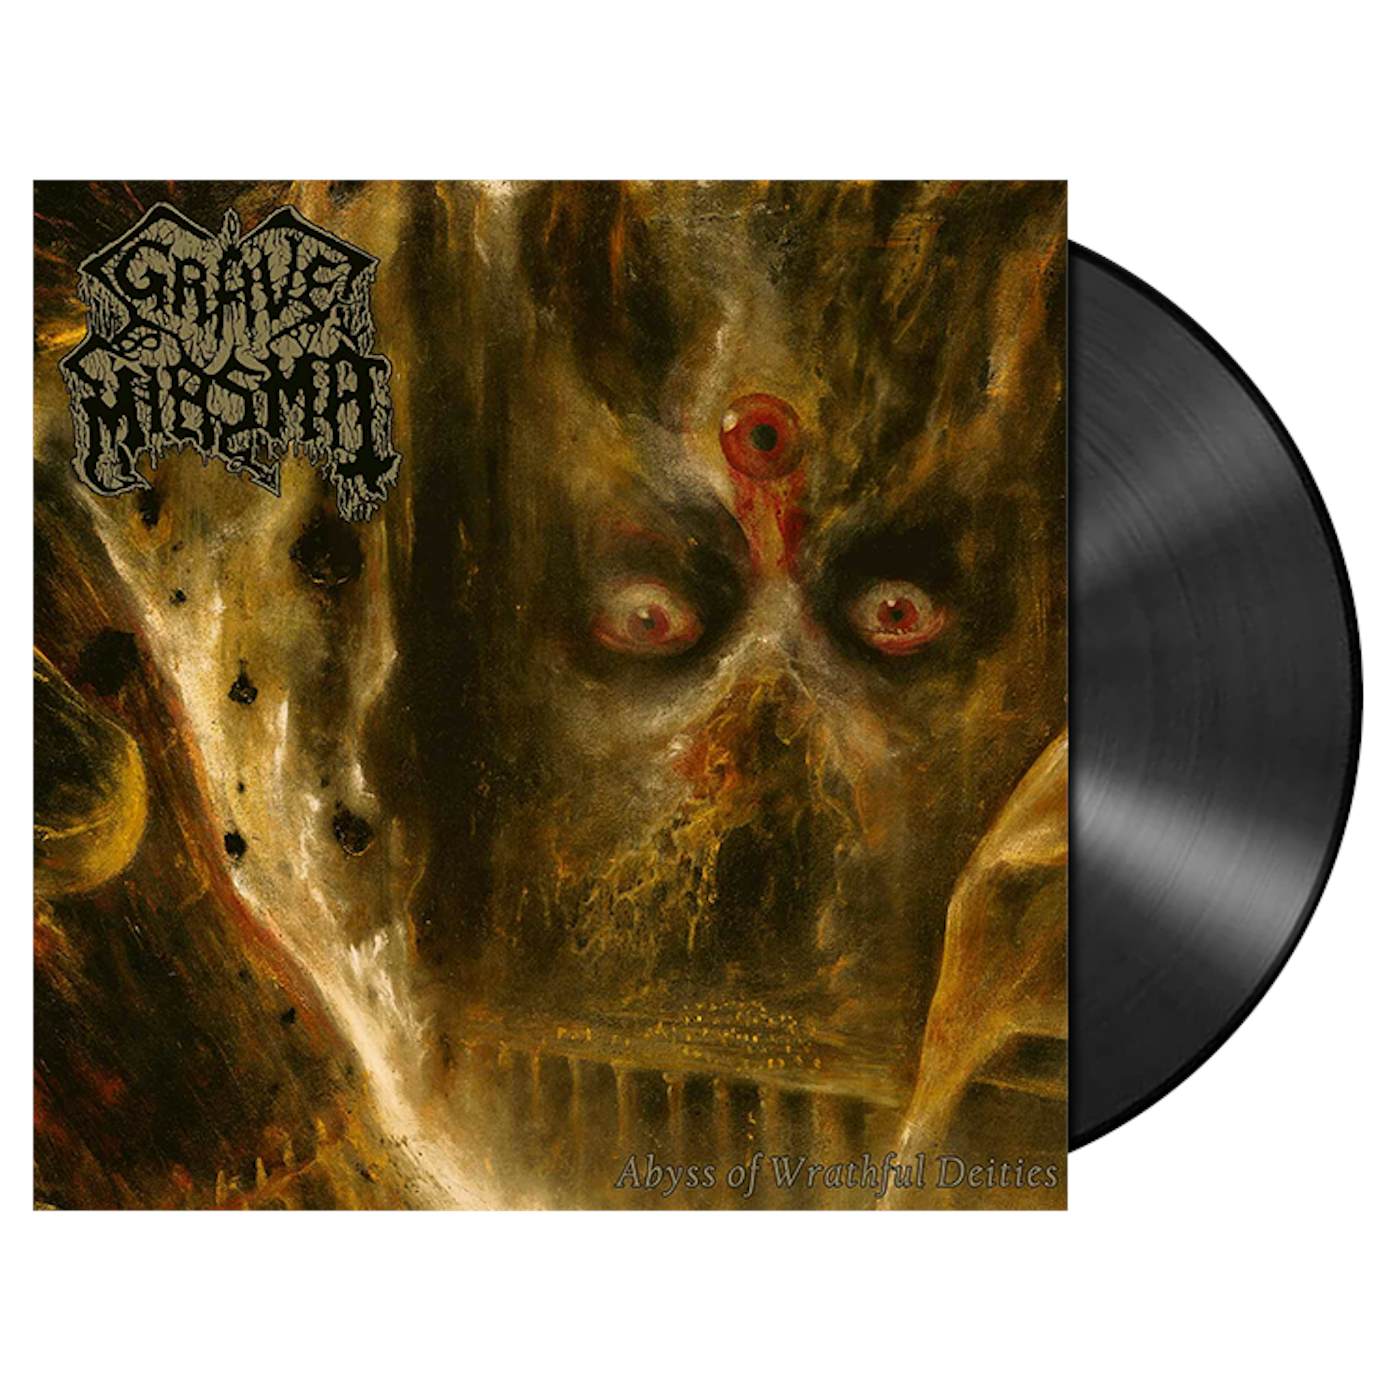 GRAVE MIASMA - 'Abyss of Wrathful Deities' 2xLP (Vinyl)